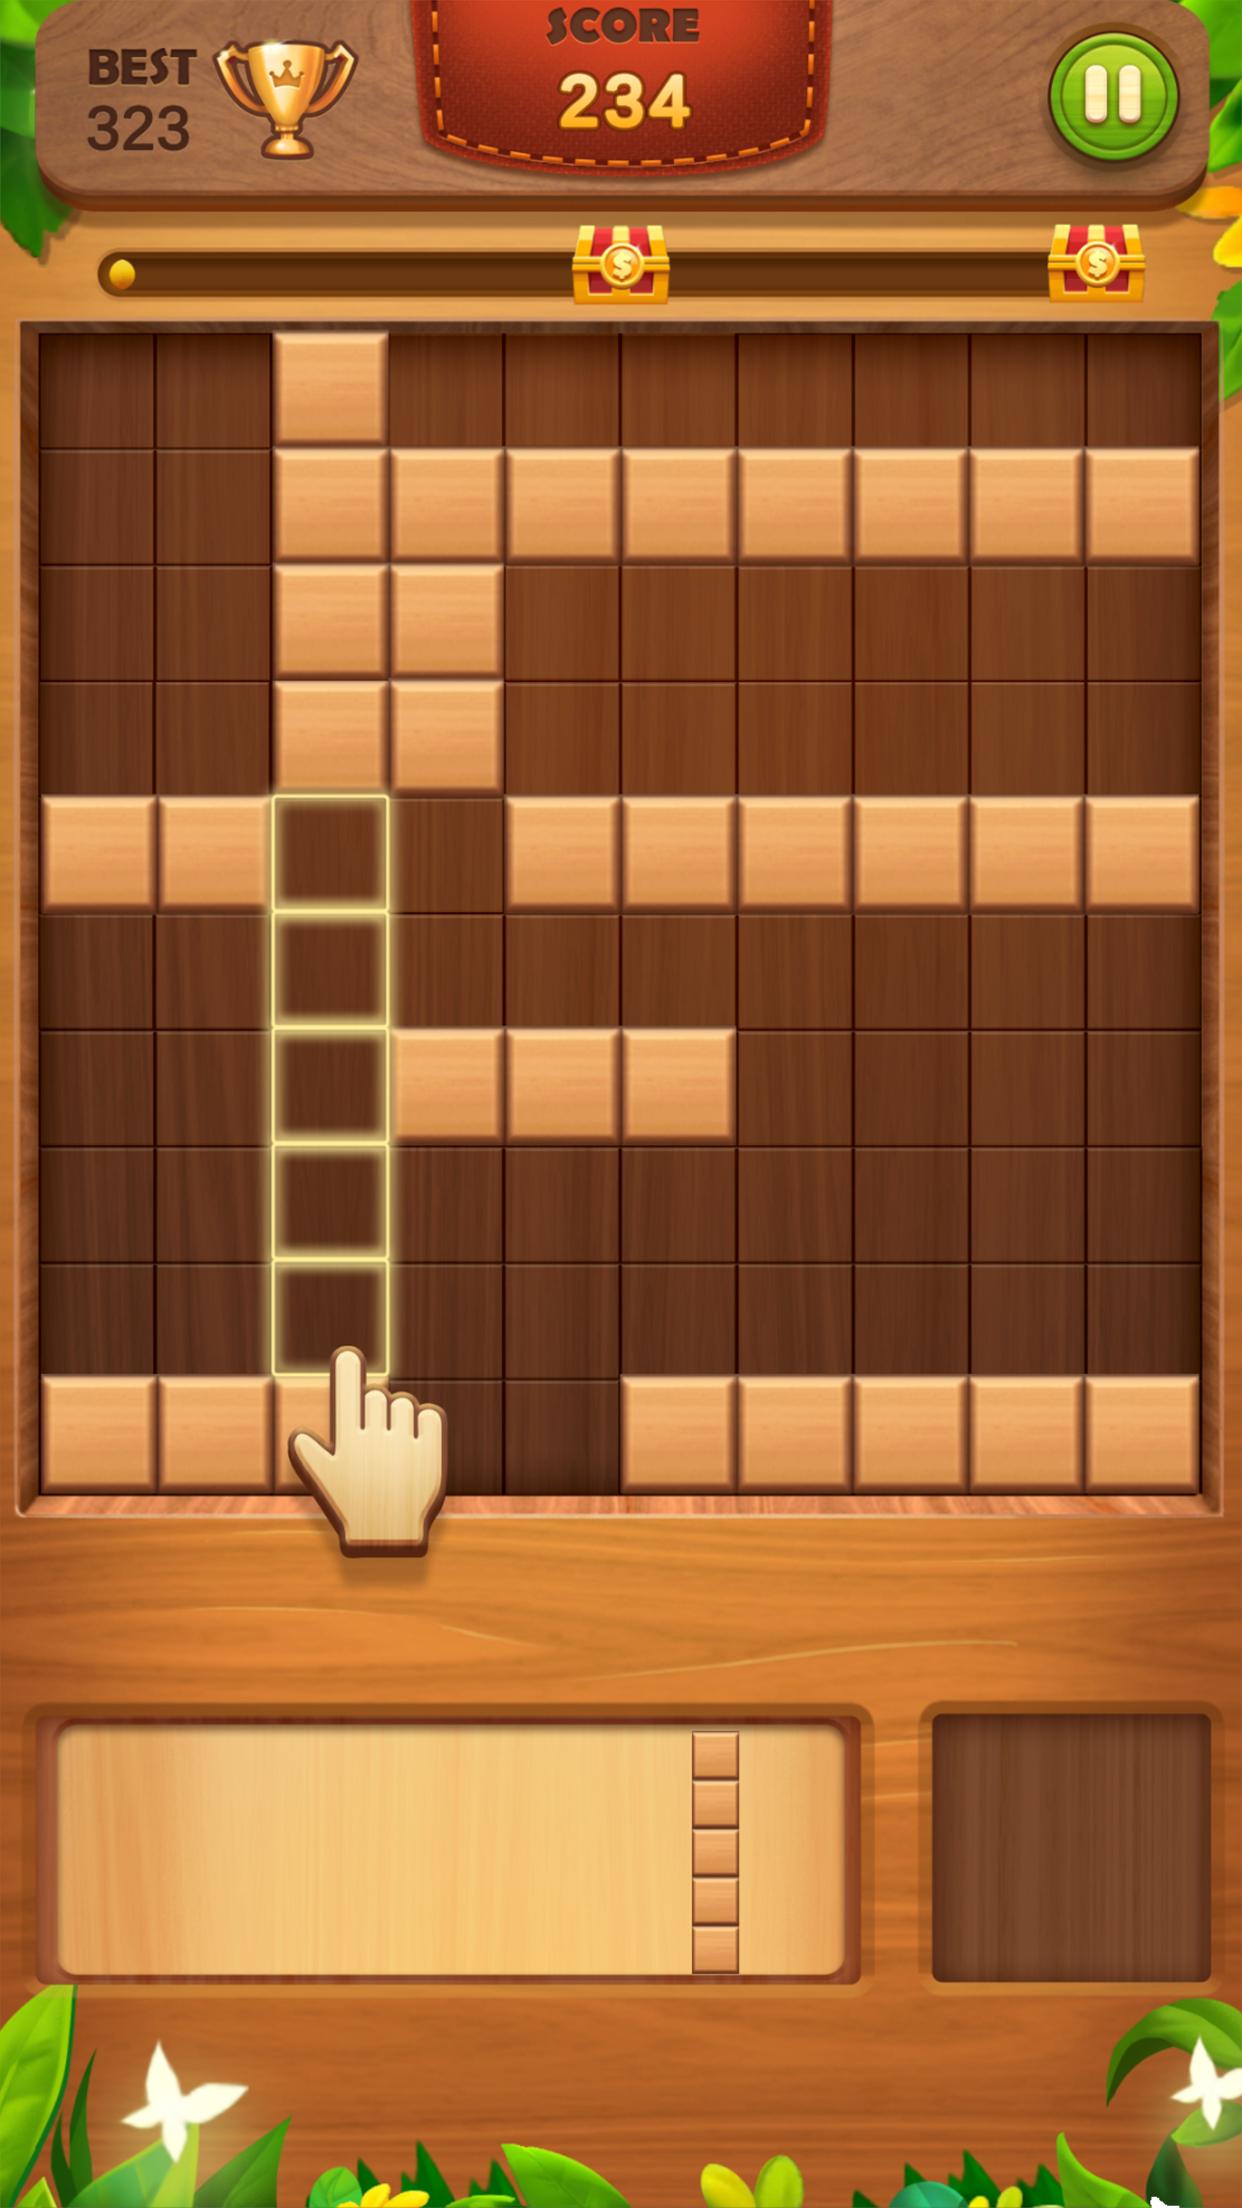 Block Puzzle Brain Training Test Wood Jewel Games 1.3.6 Screenshot 3